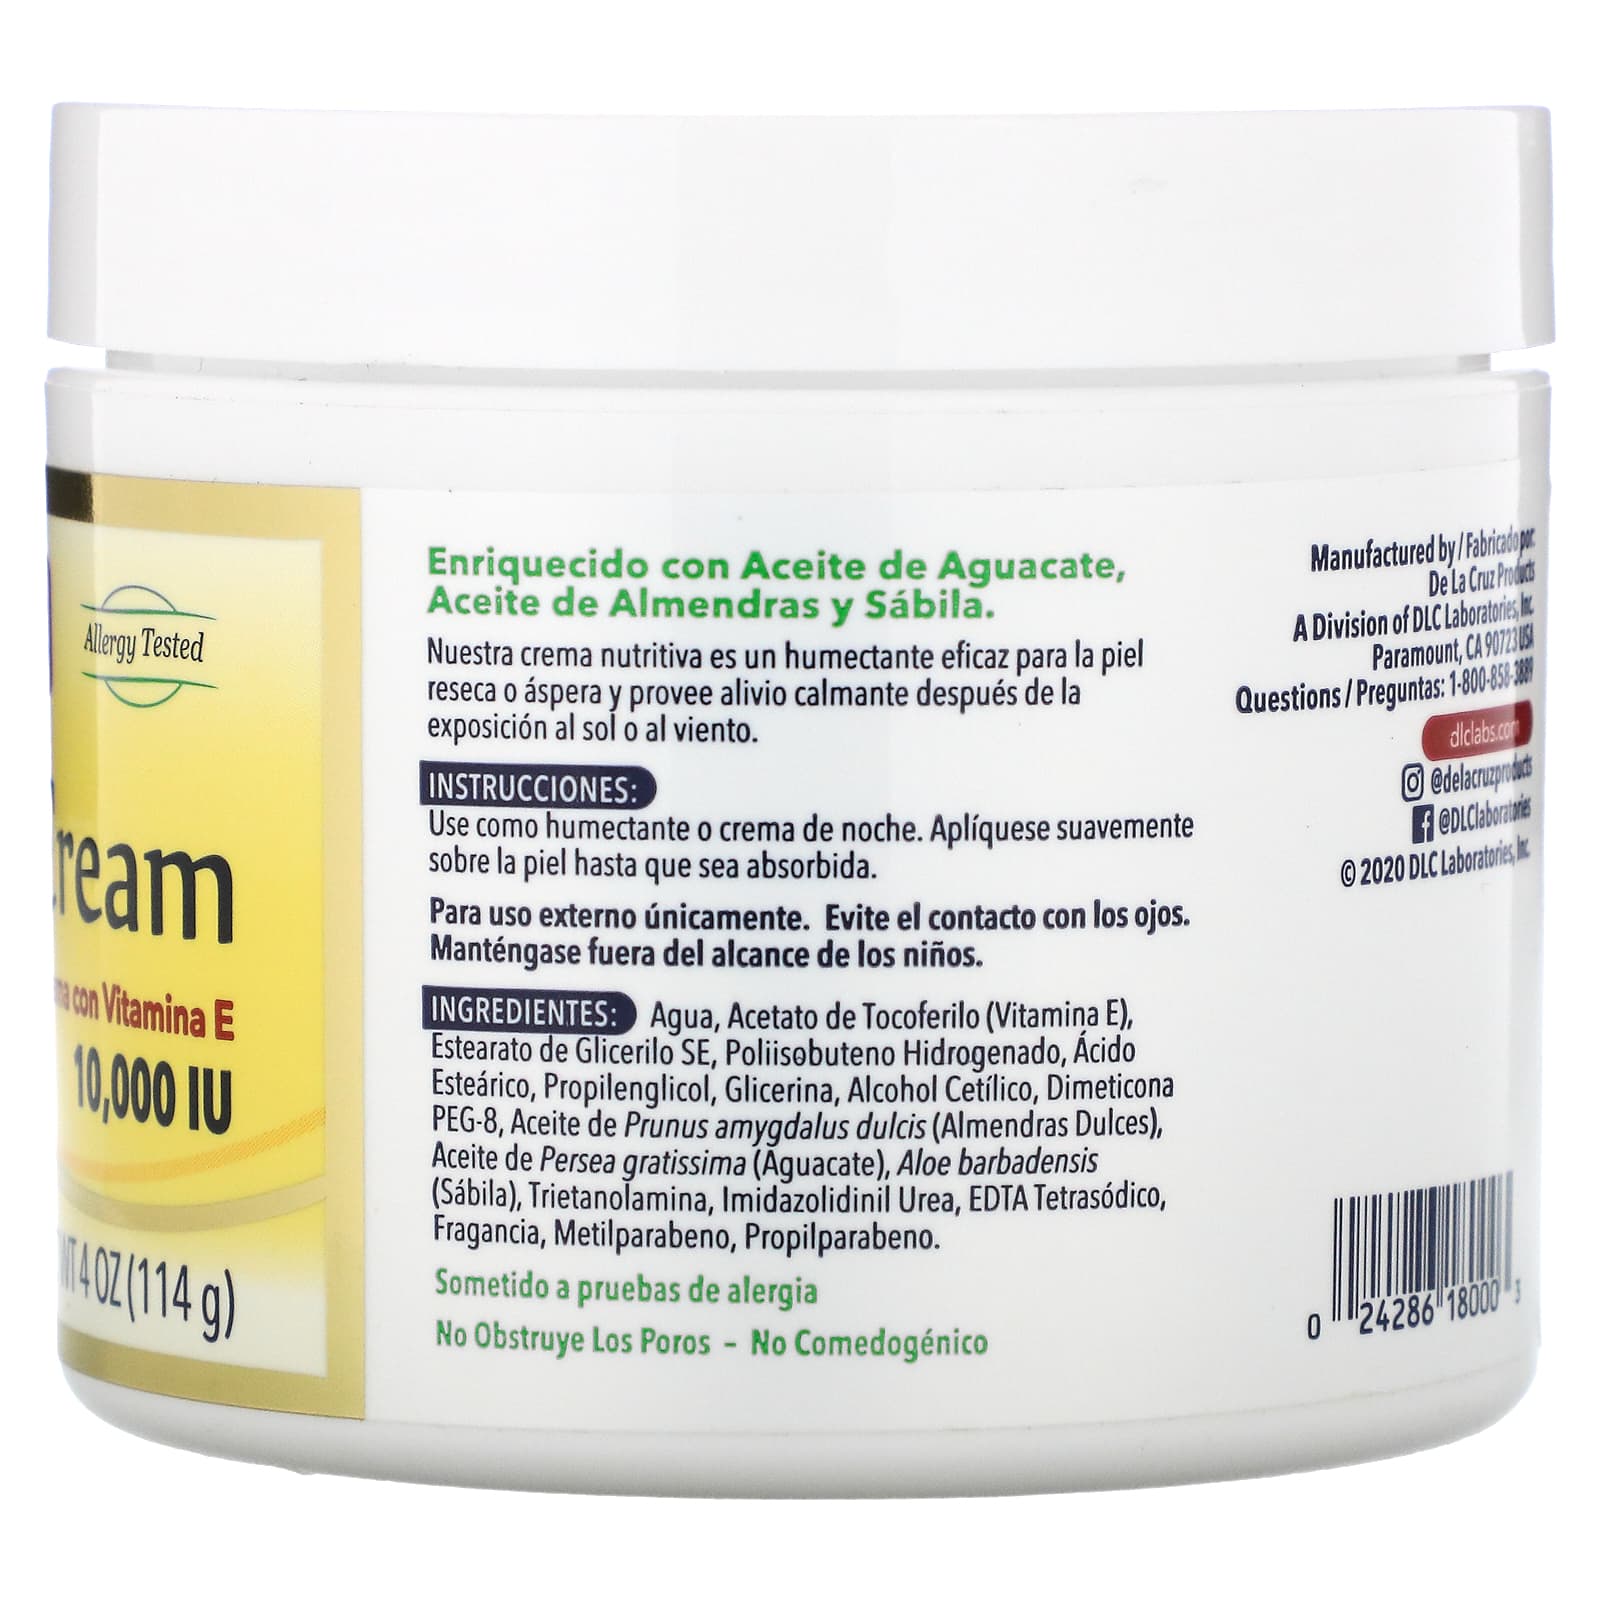 De La Cruz Vitamin E Cream skin moisturizer - 10,000 IU 4 oz (114 g)